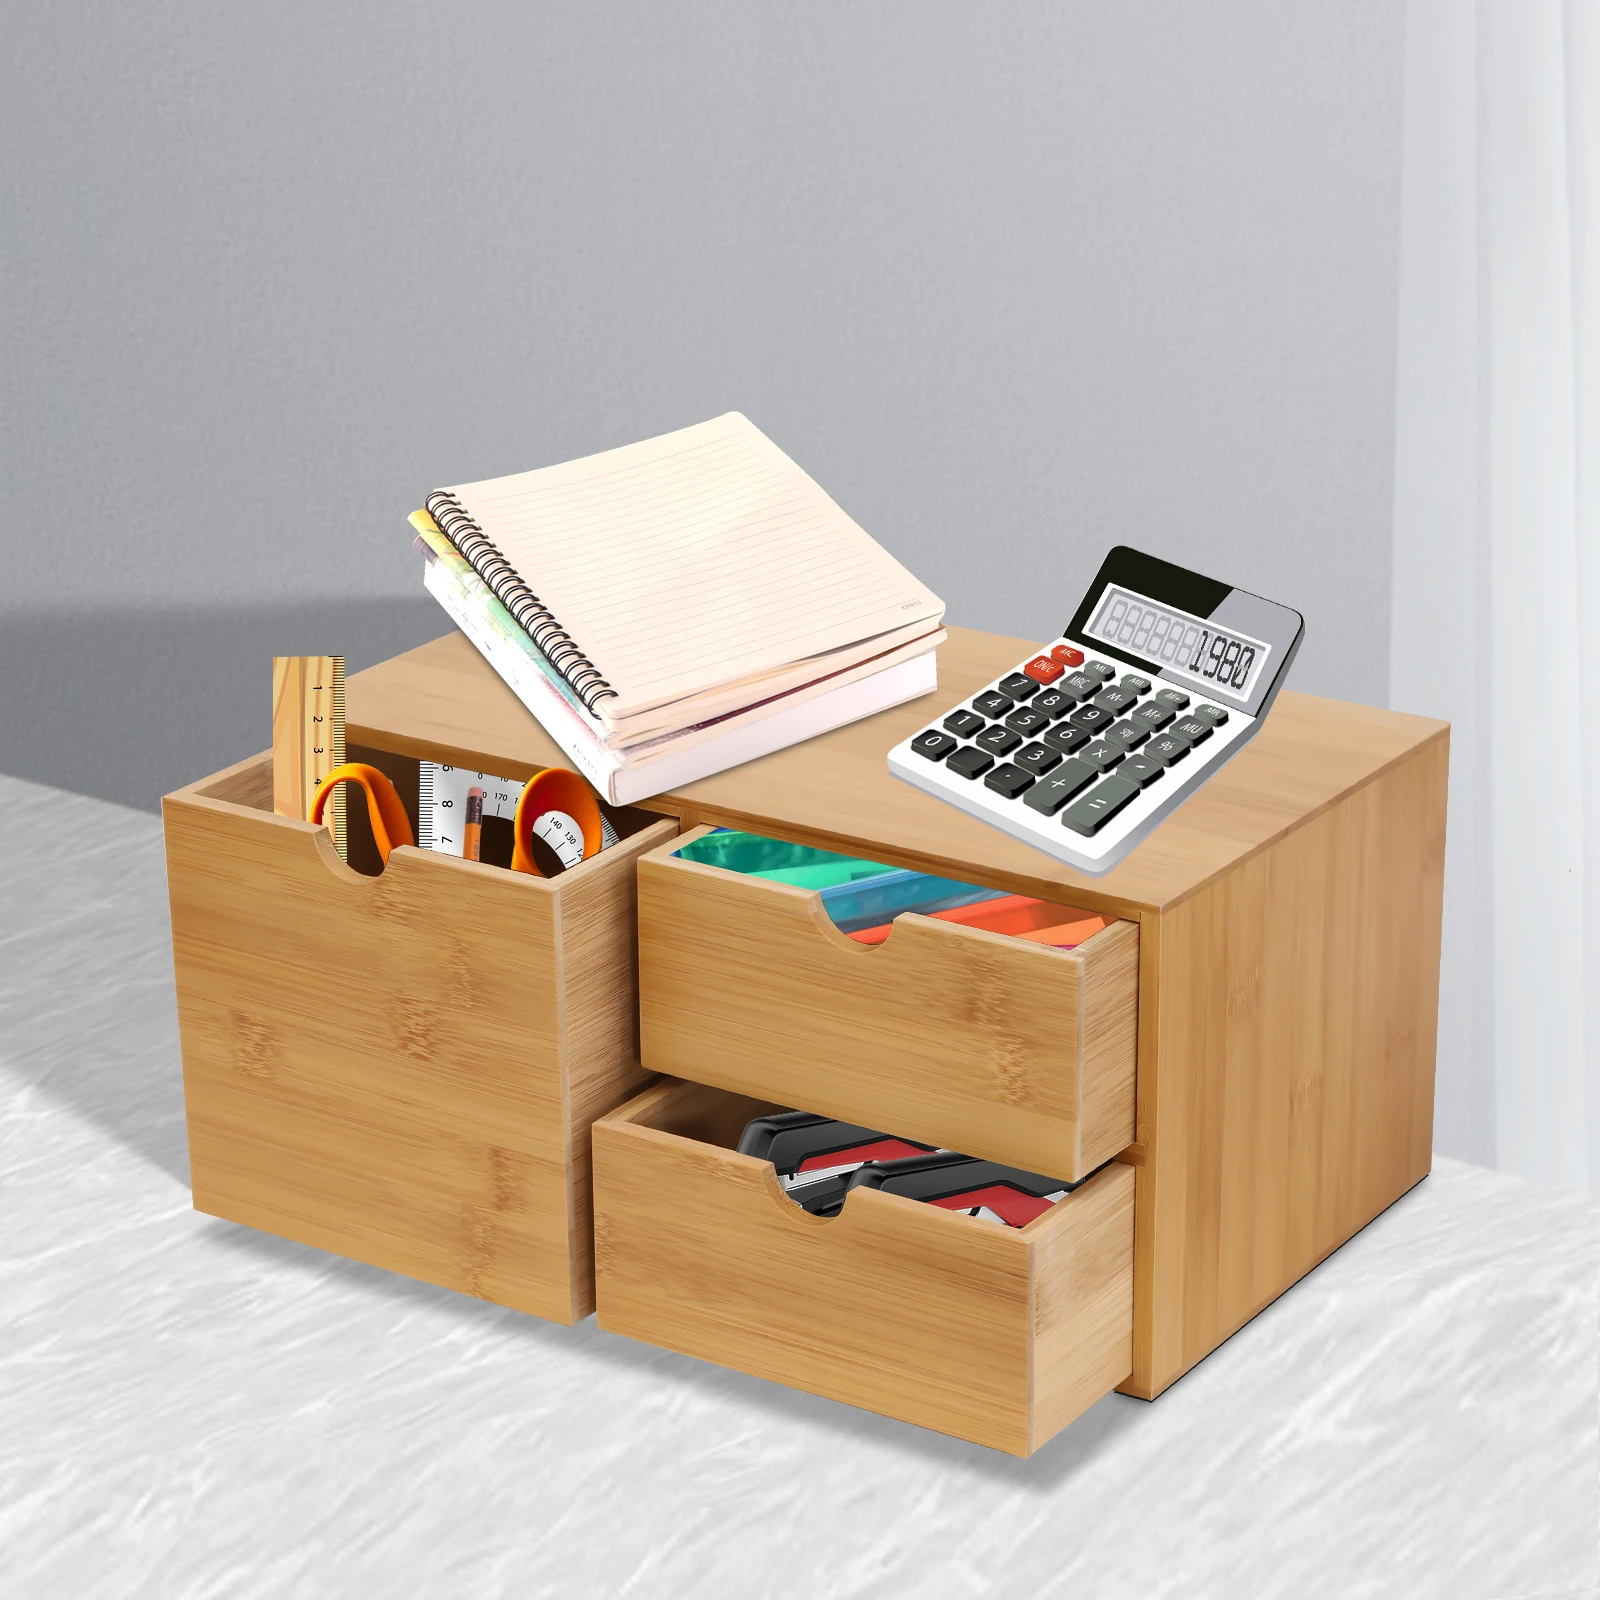 Bamboo Desk Organizer, Mini Drawer, Tabletop Storage, Organization Box for Office, Home, Toiletries Supplies, No Attachment kitchen drawer organizer